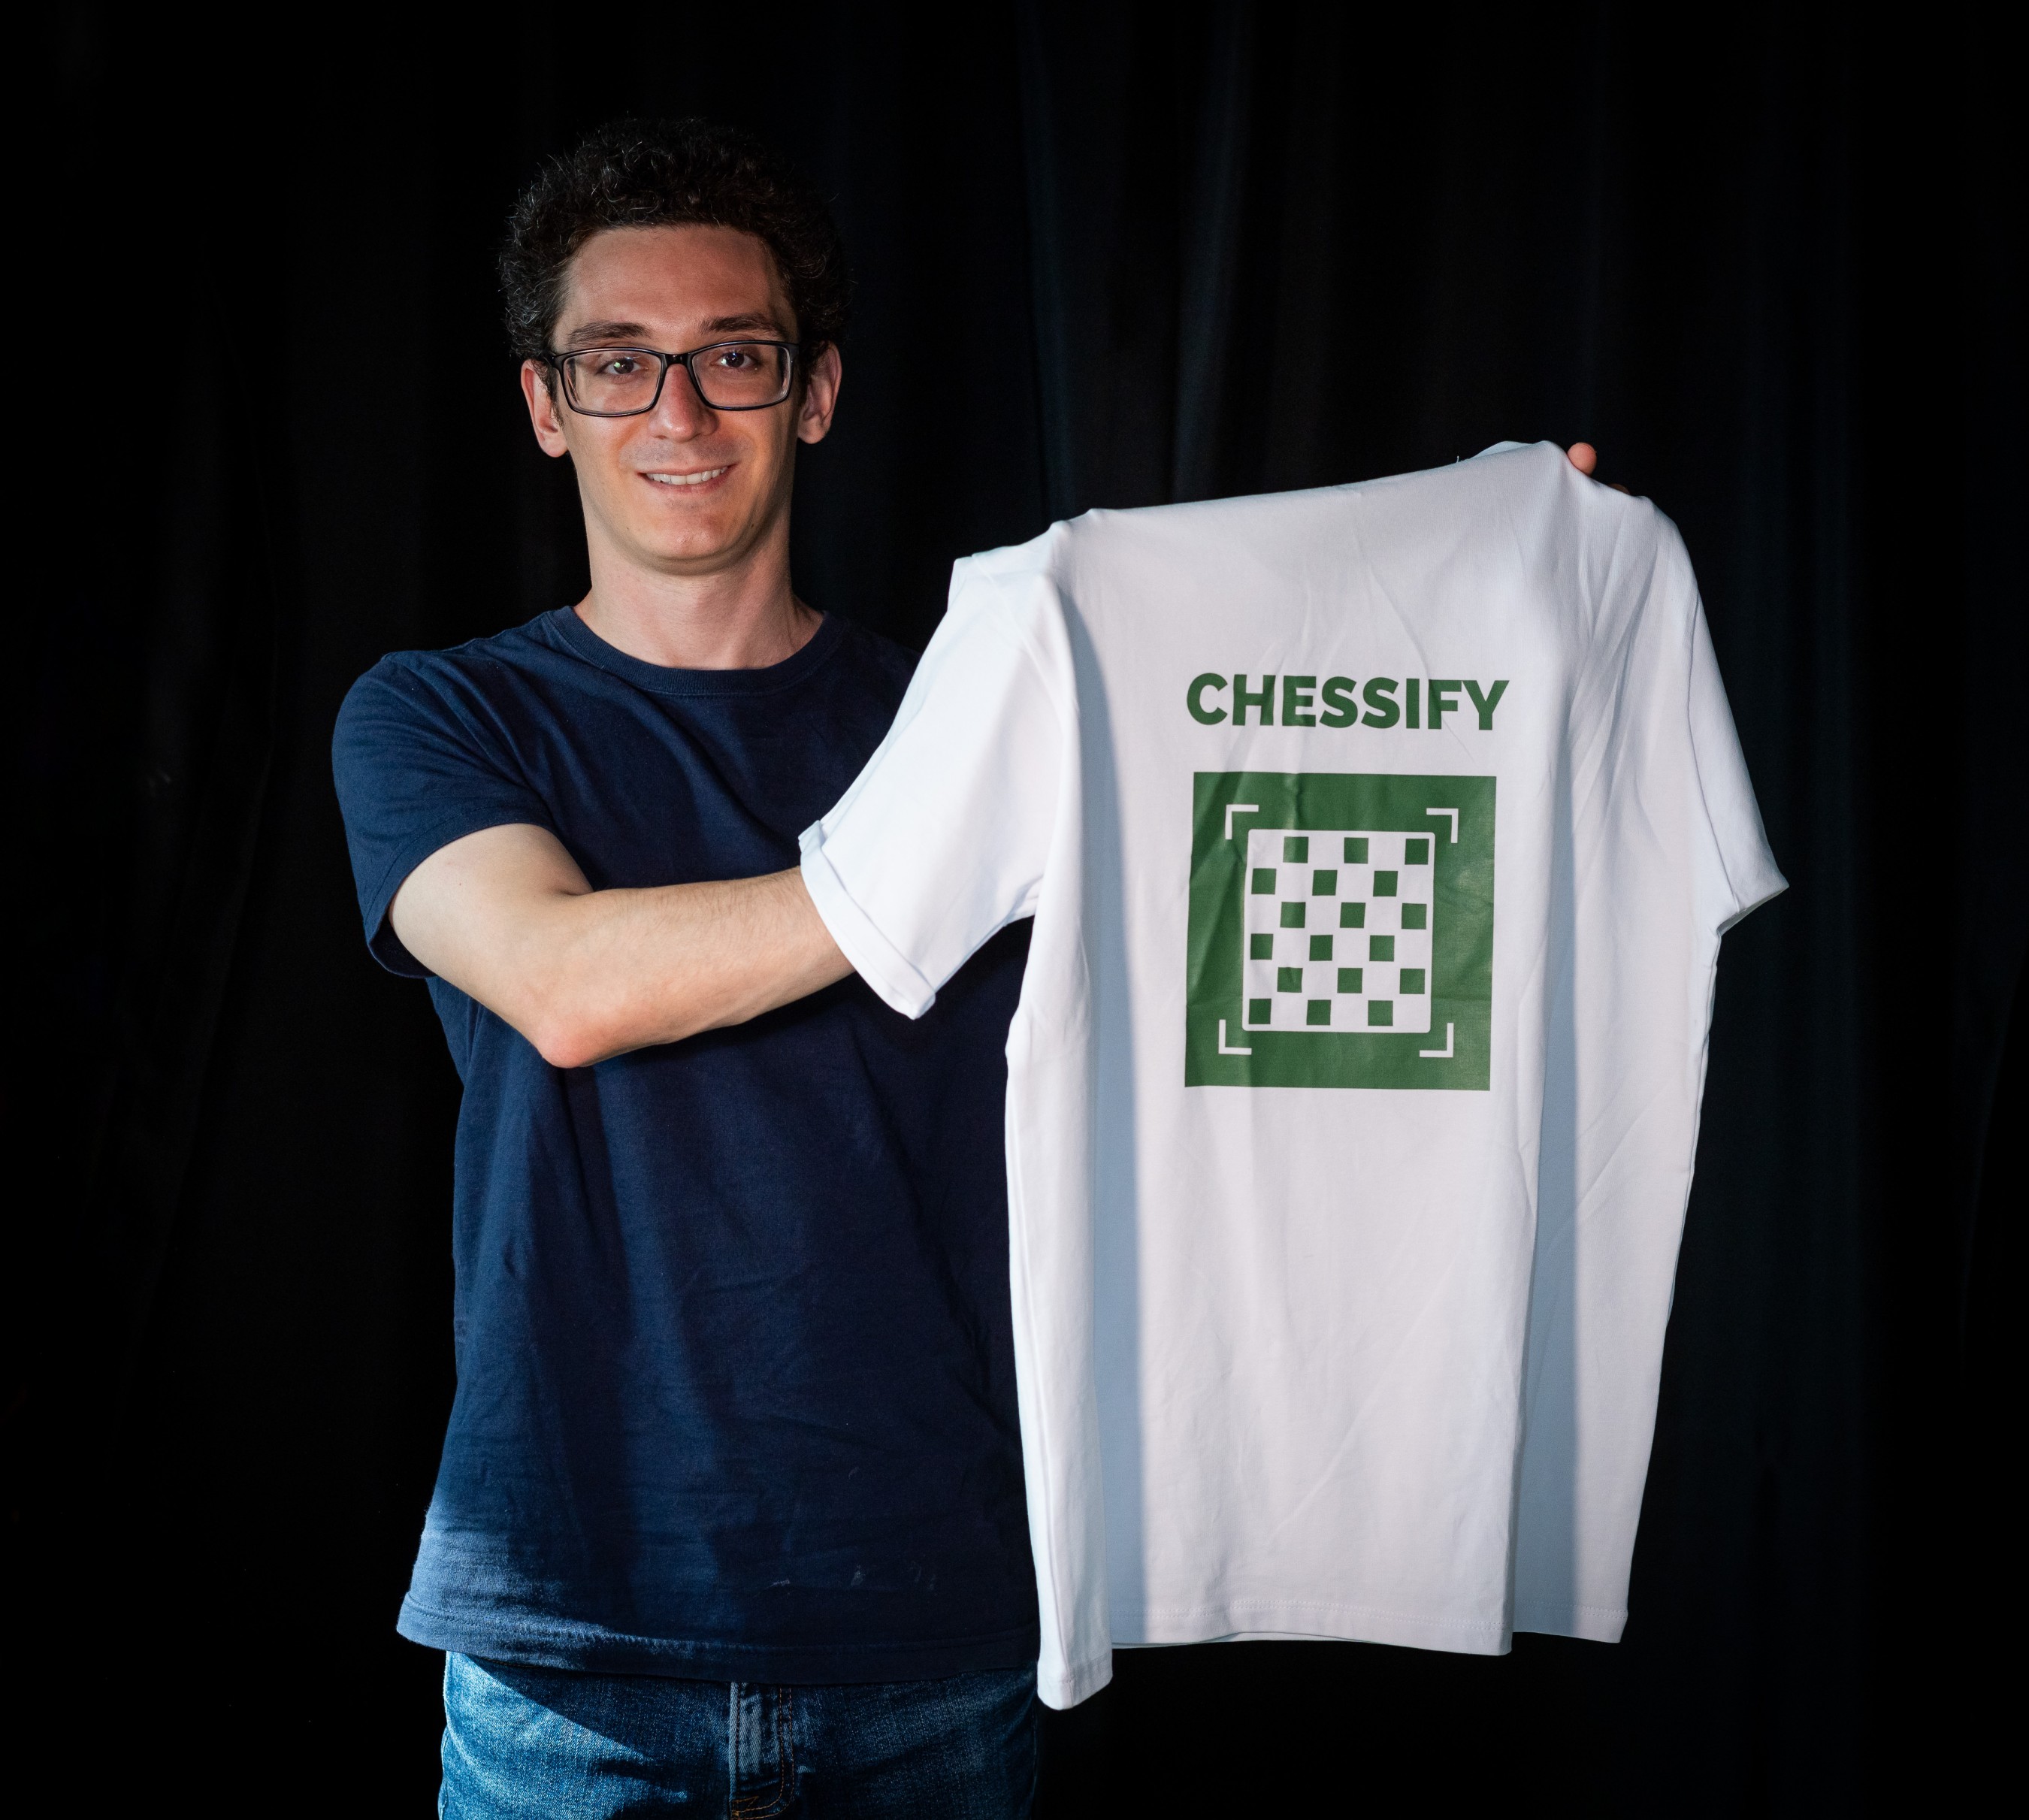 Fabiano Caruana holding Chessify's t-shirt